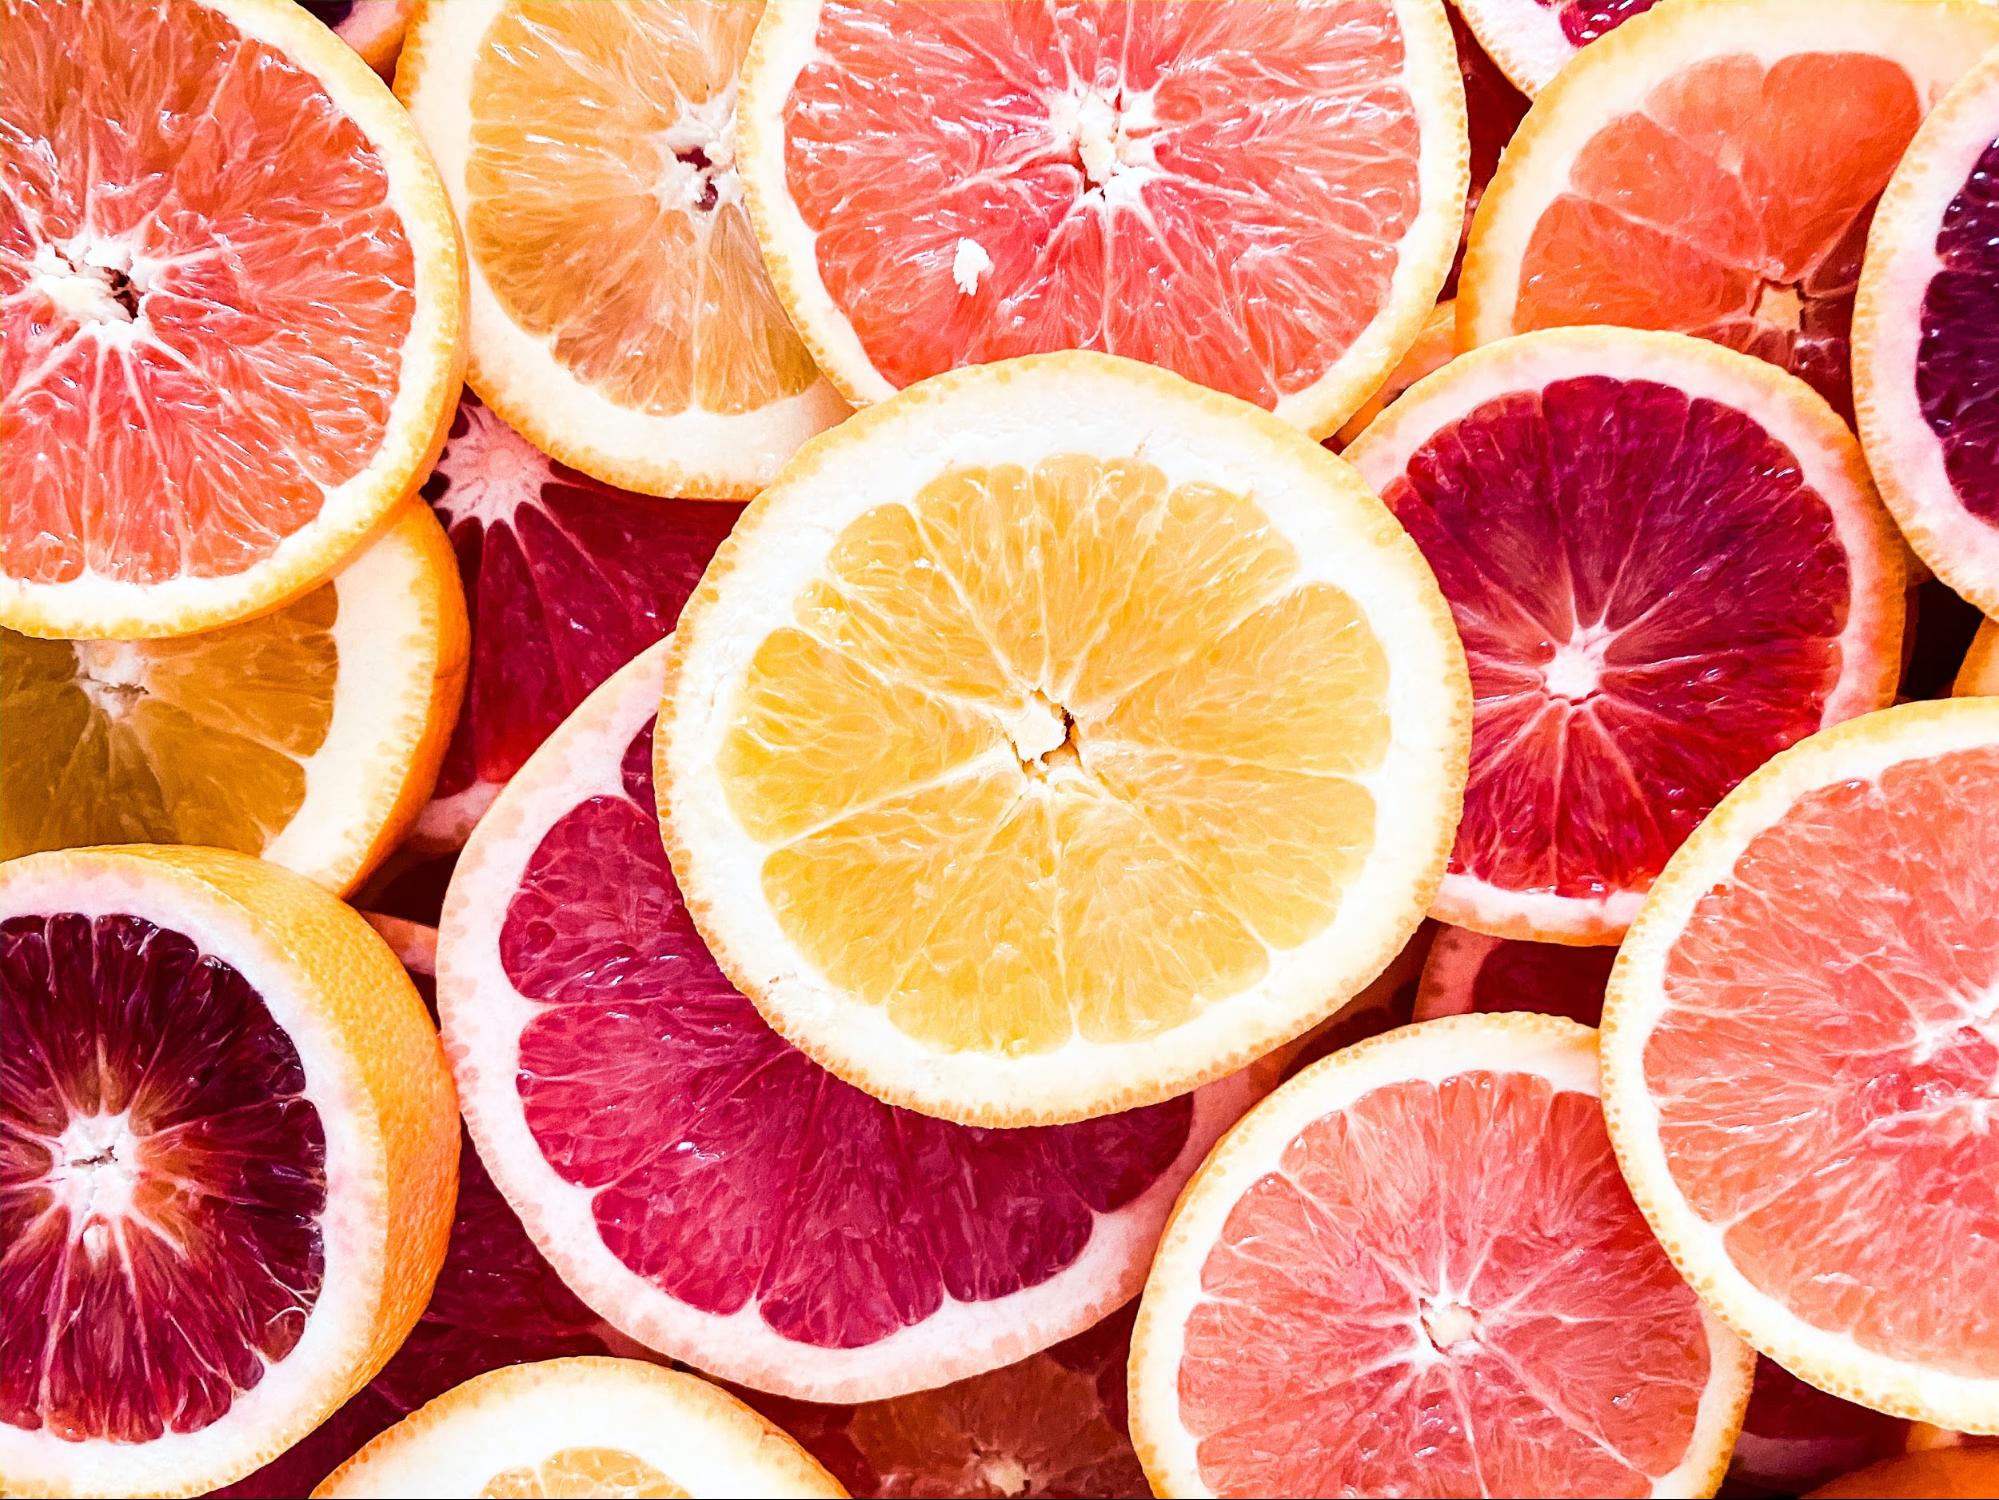 Slices of oranges and grapefruit